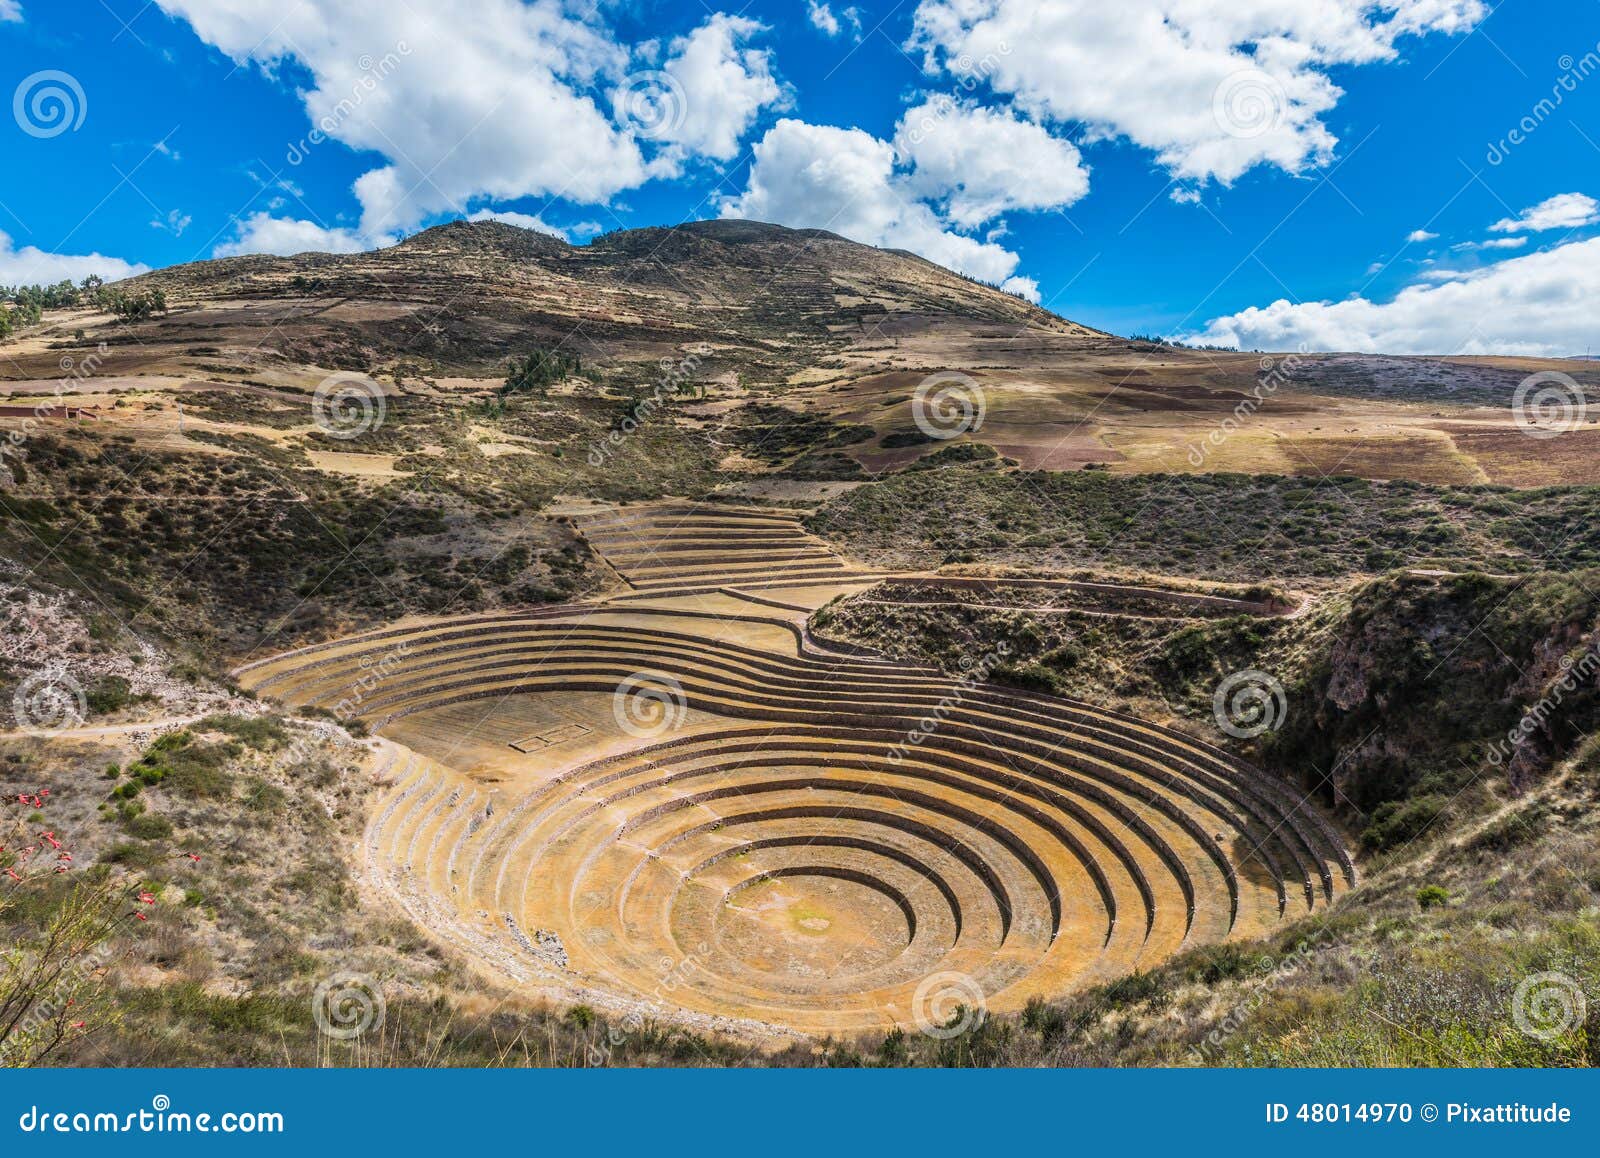 moray ruins peruvian andes cuzco peru